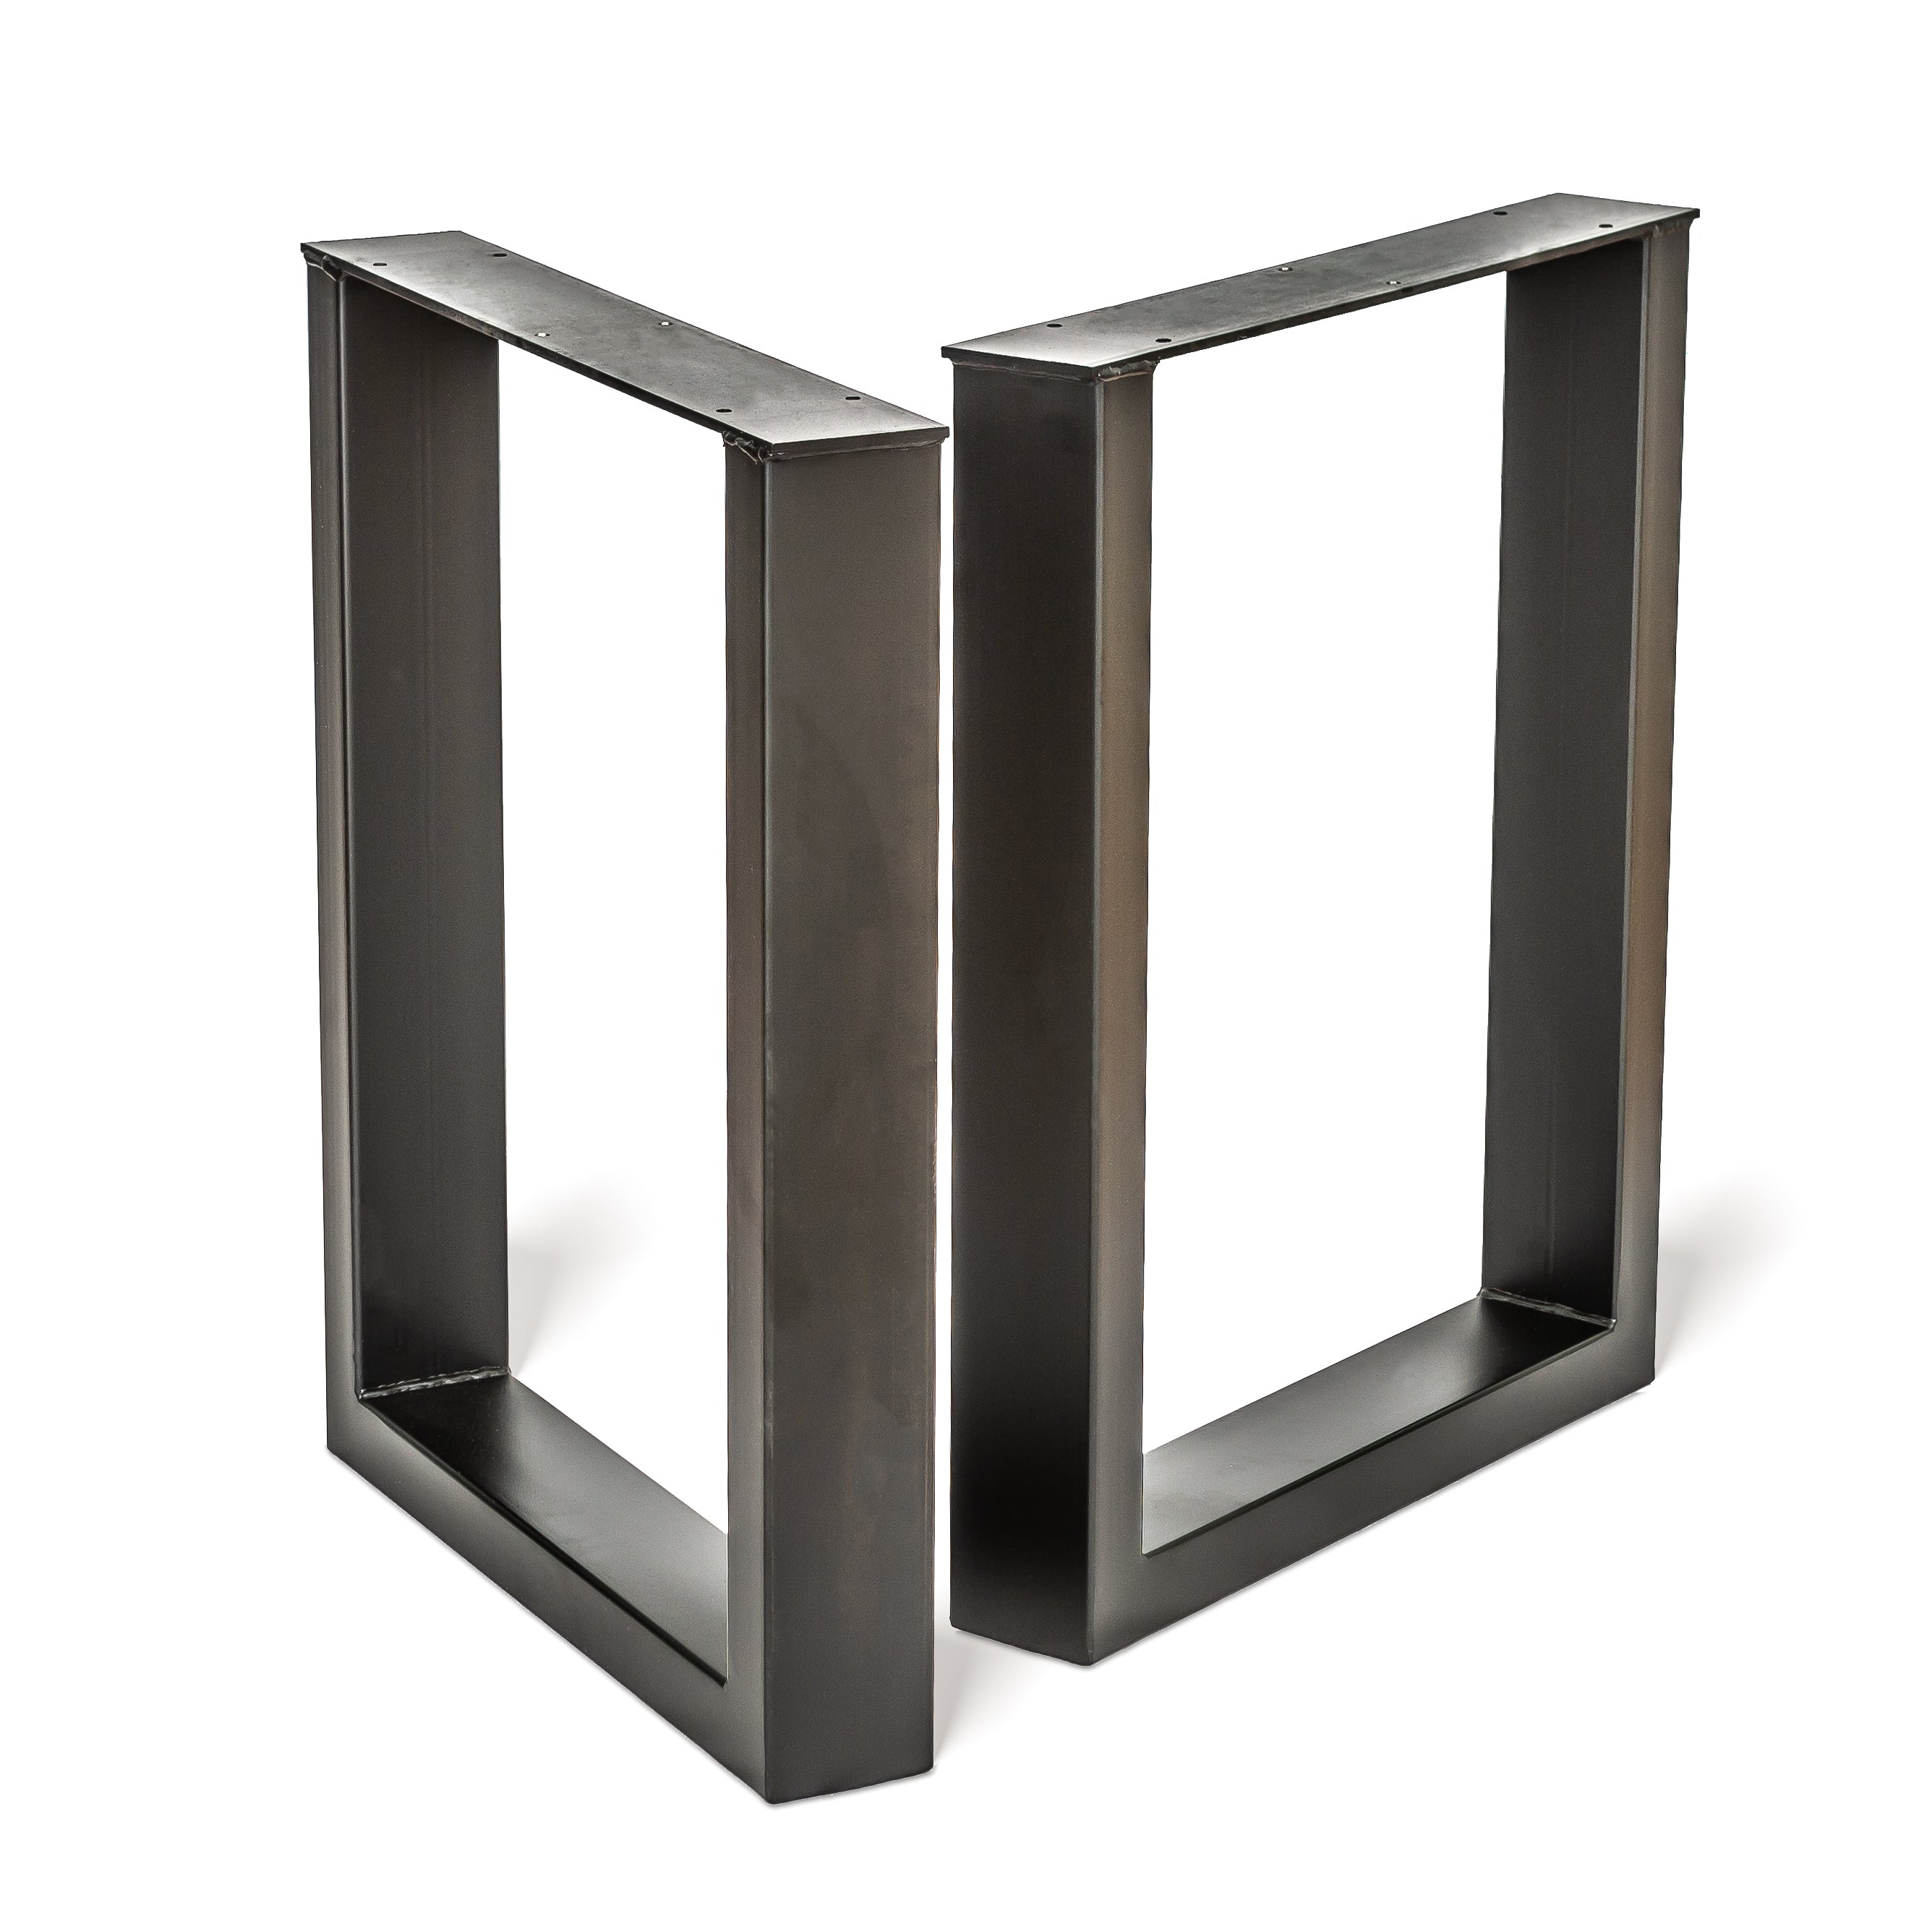 2 x 4 Square Metal Table Legs by Carolina Leg Co